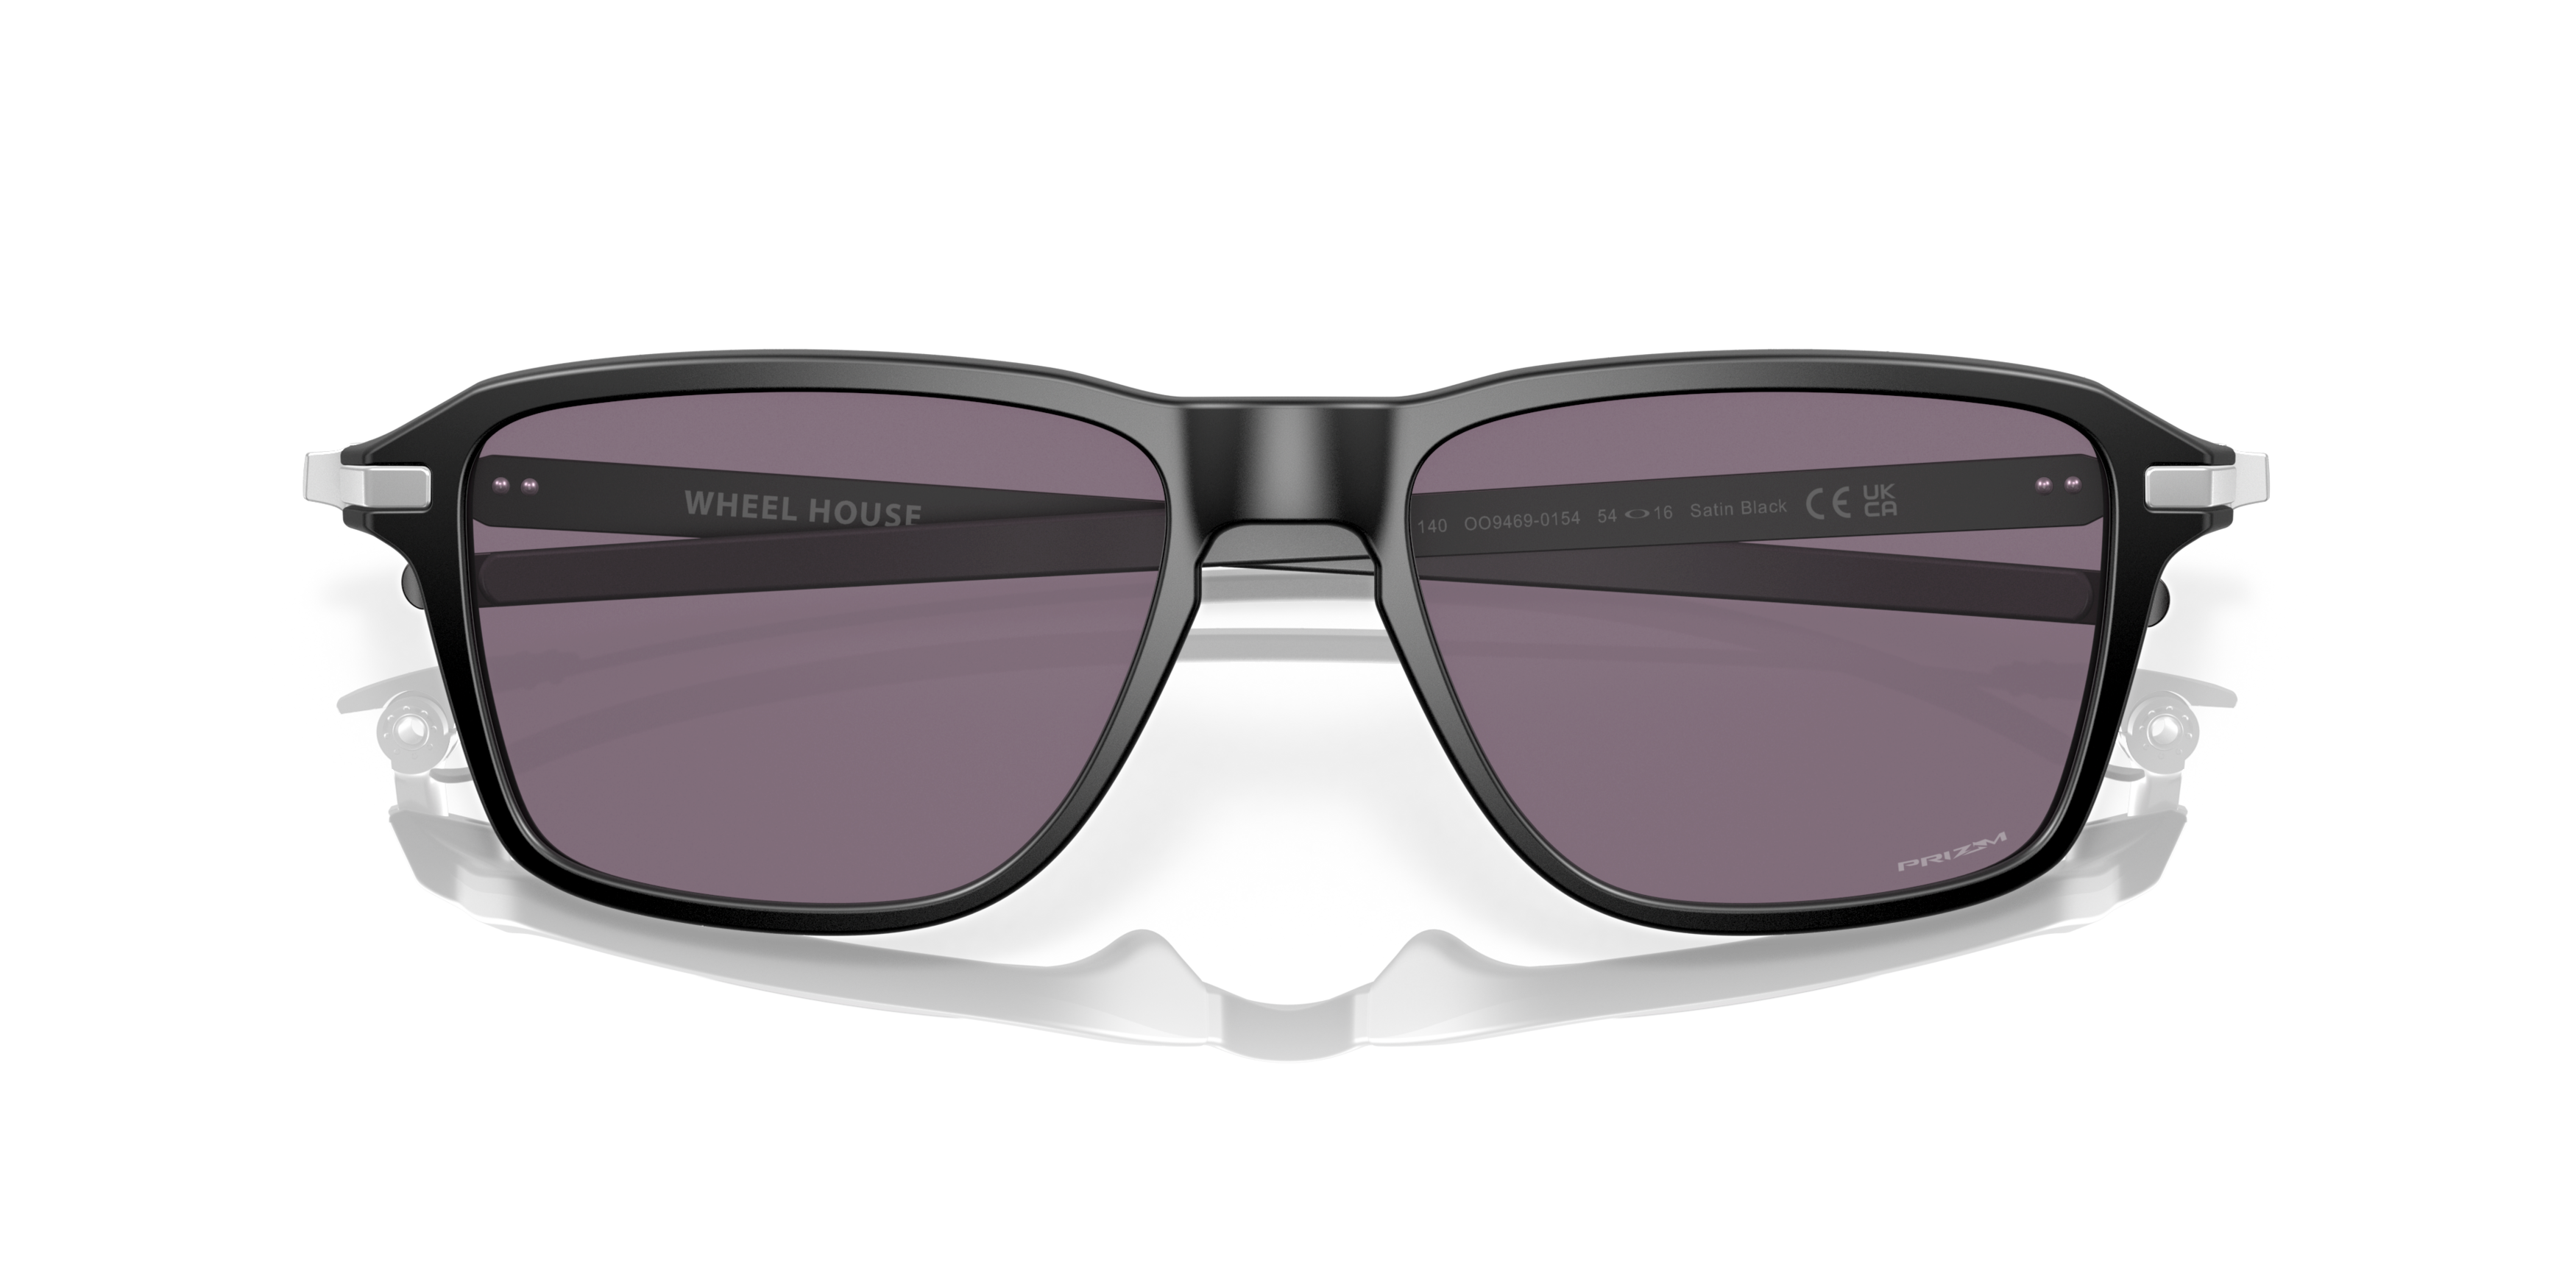 Folded Oakley Wheel House OO 9469 (946901) Sunglasses Grey / Black